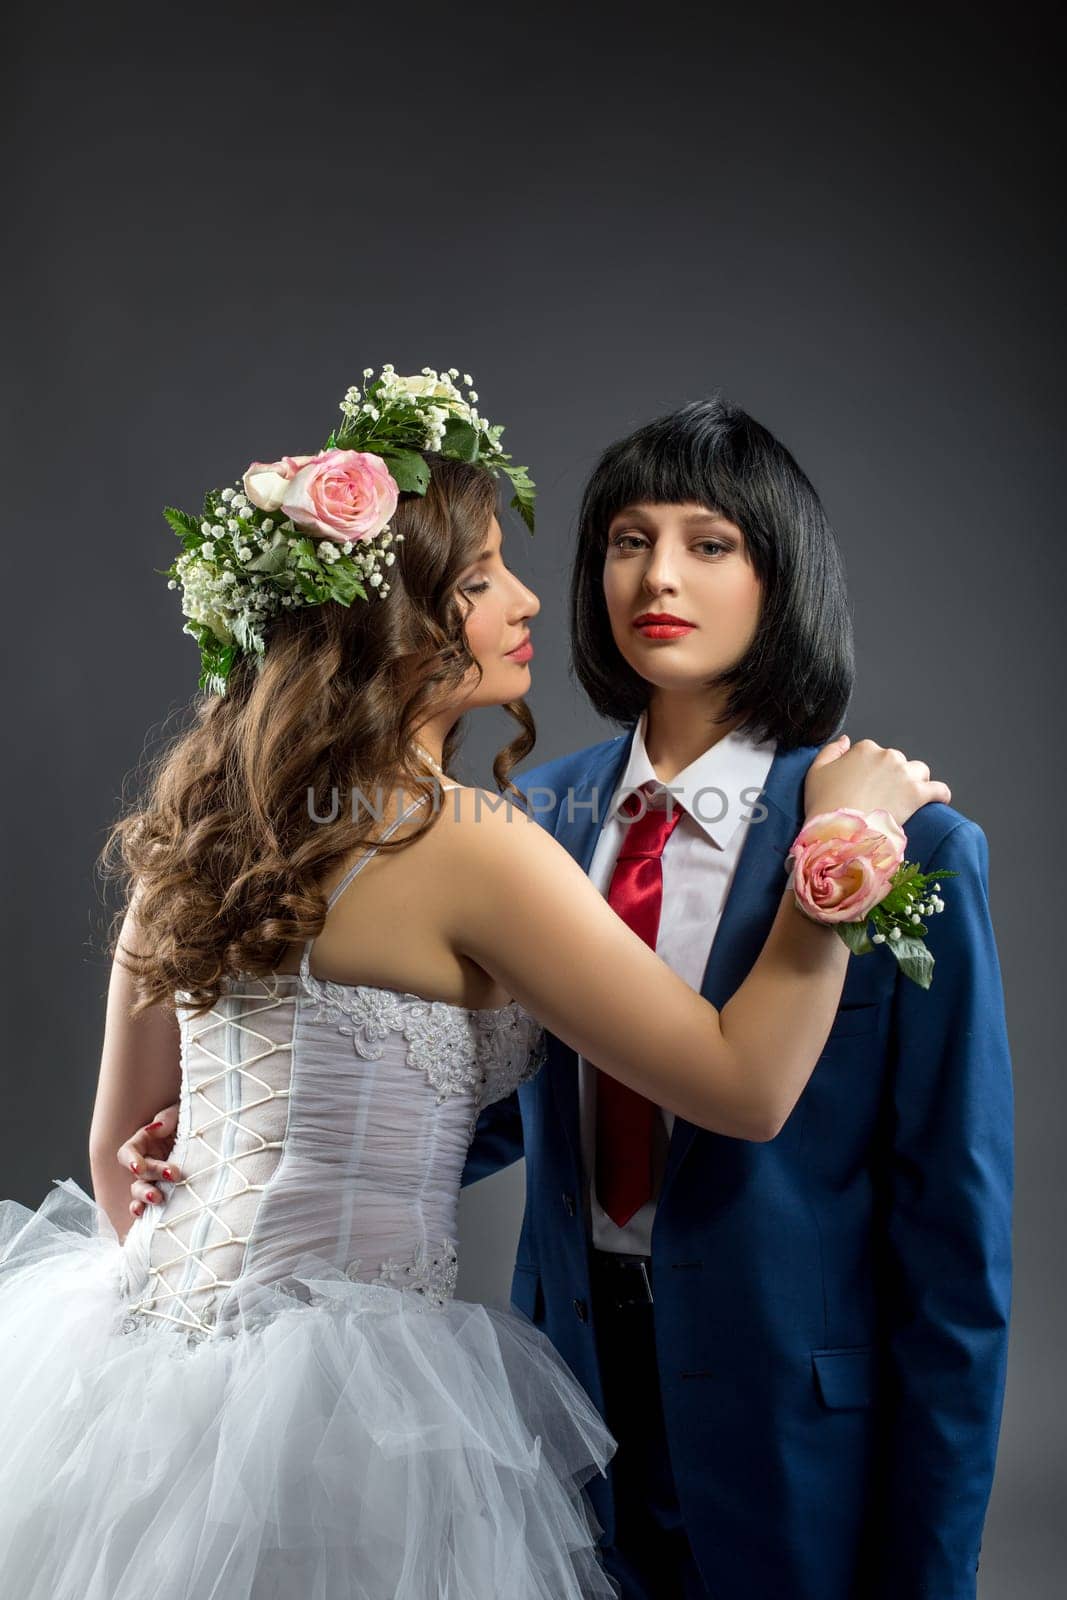 Image of lesbian bride and groom posing at camera